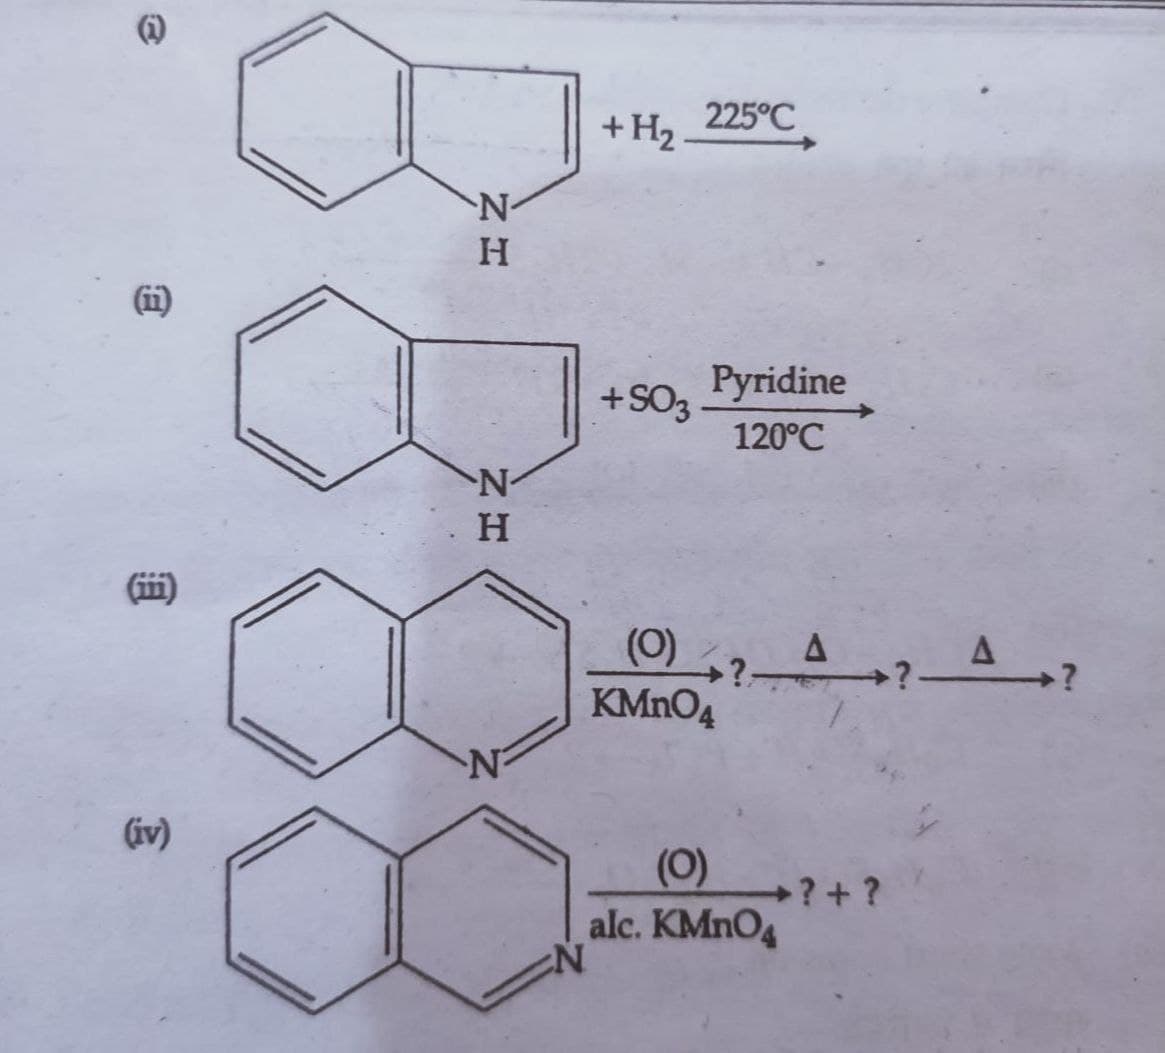 (11)
€
(iv)
N
H
ZH
N
Η
225°C
+ H₂
+SO3
Pyridine
120°℃
(0) 、?▬ª✦? ª?
KMnO4
(0)
alc. KMnO4
?+ ?